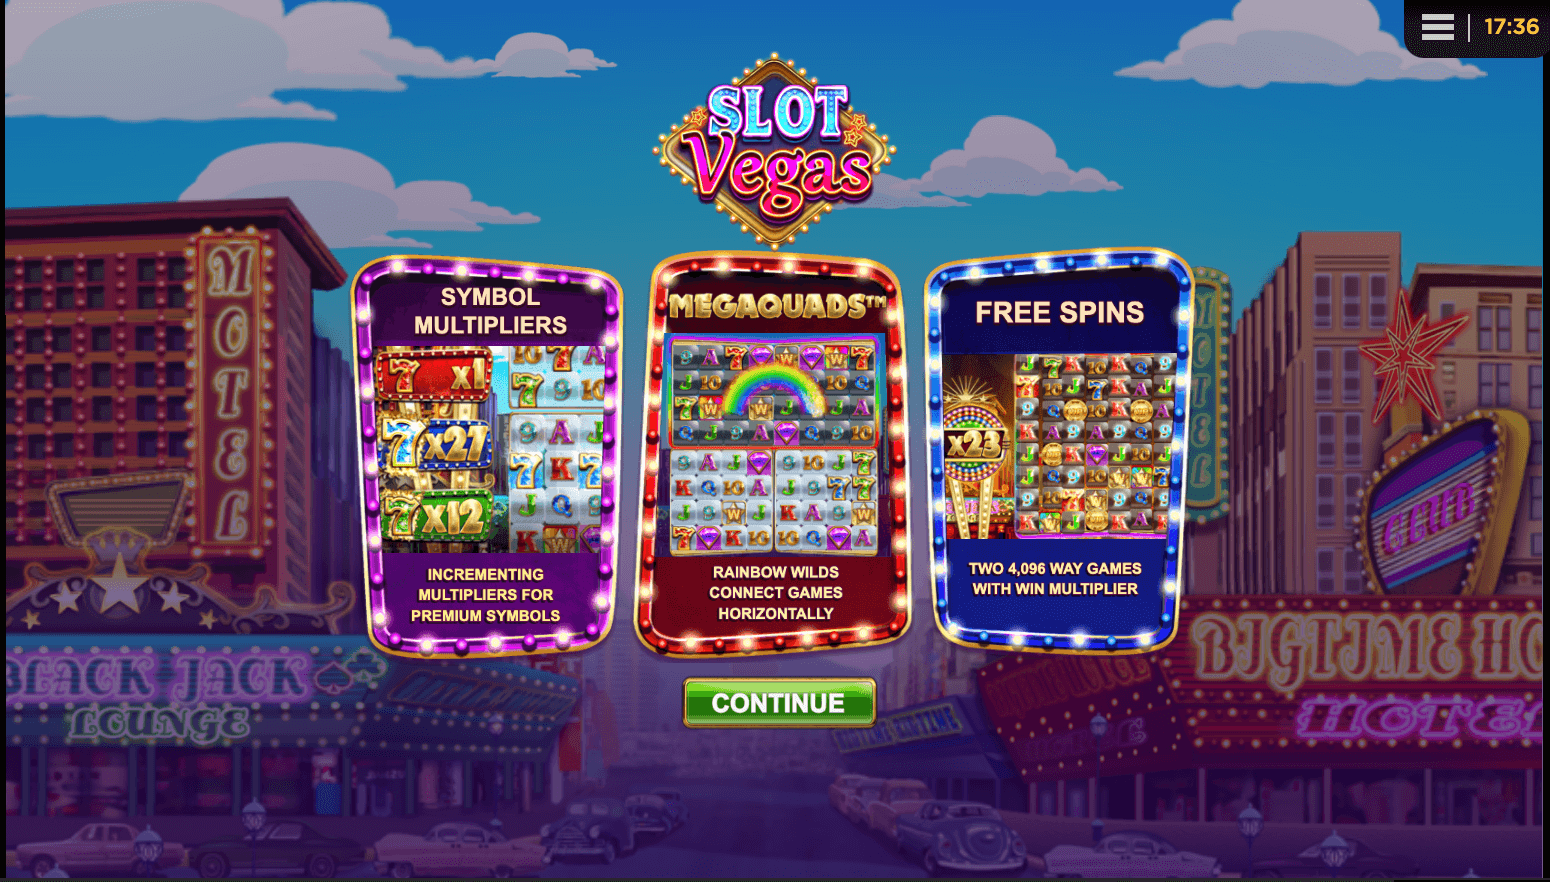 Slot Vegas Megaquads Spel proces